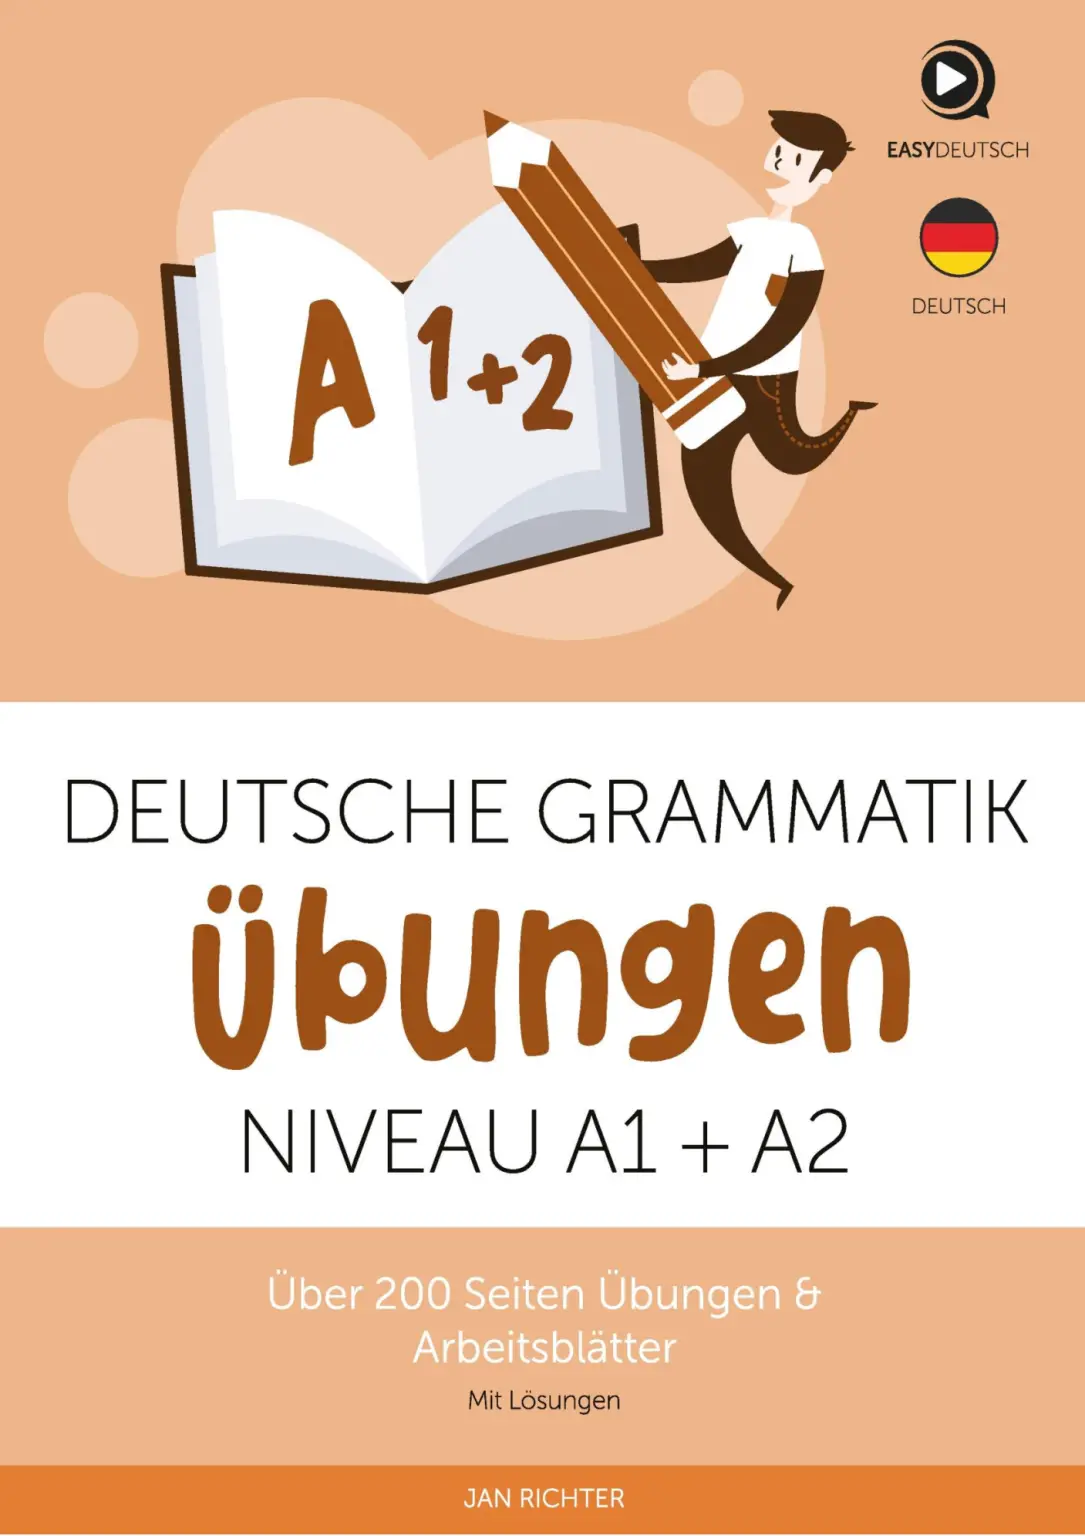 Rich Results on Google's SERP when searching for ''Deutsche-Grammatik-Ubungen-Niveau-A1+A2''